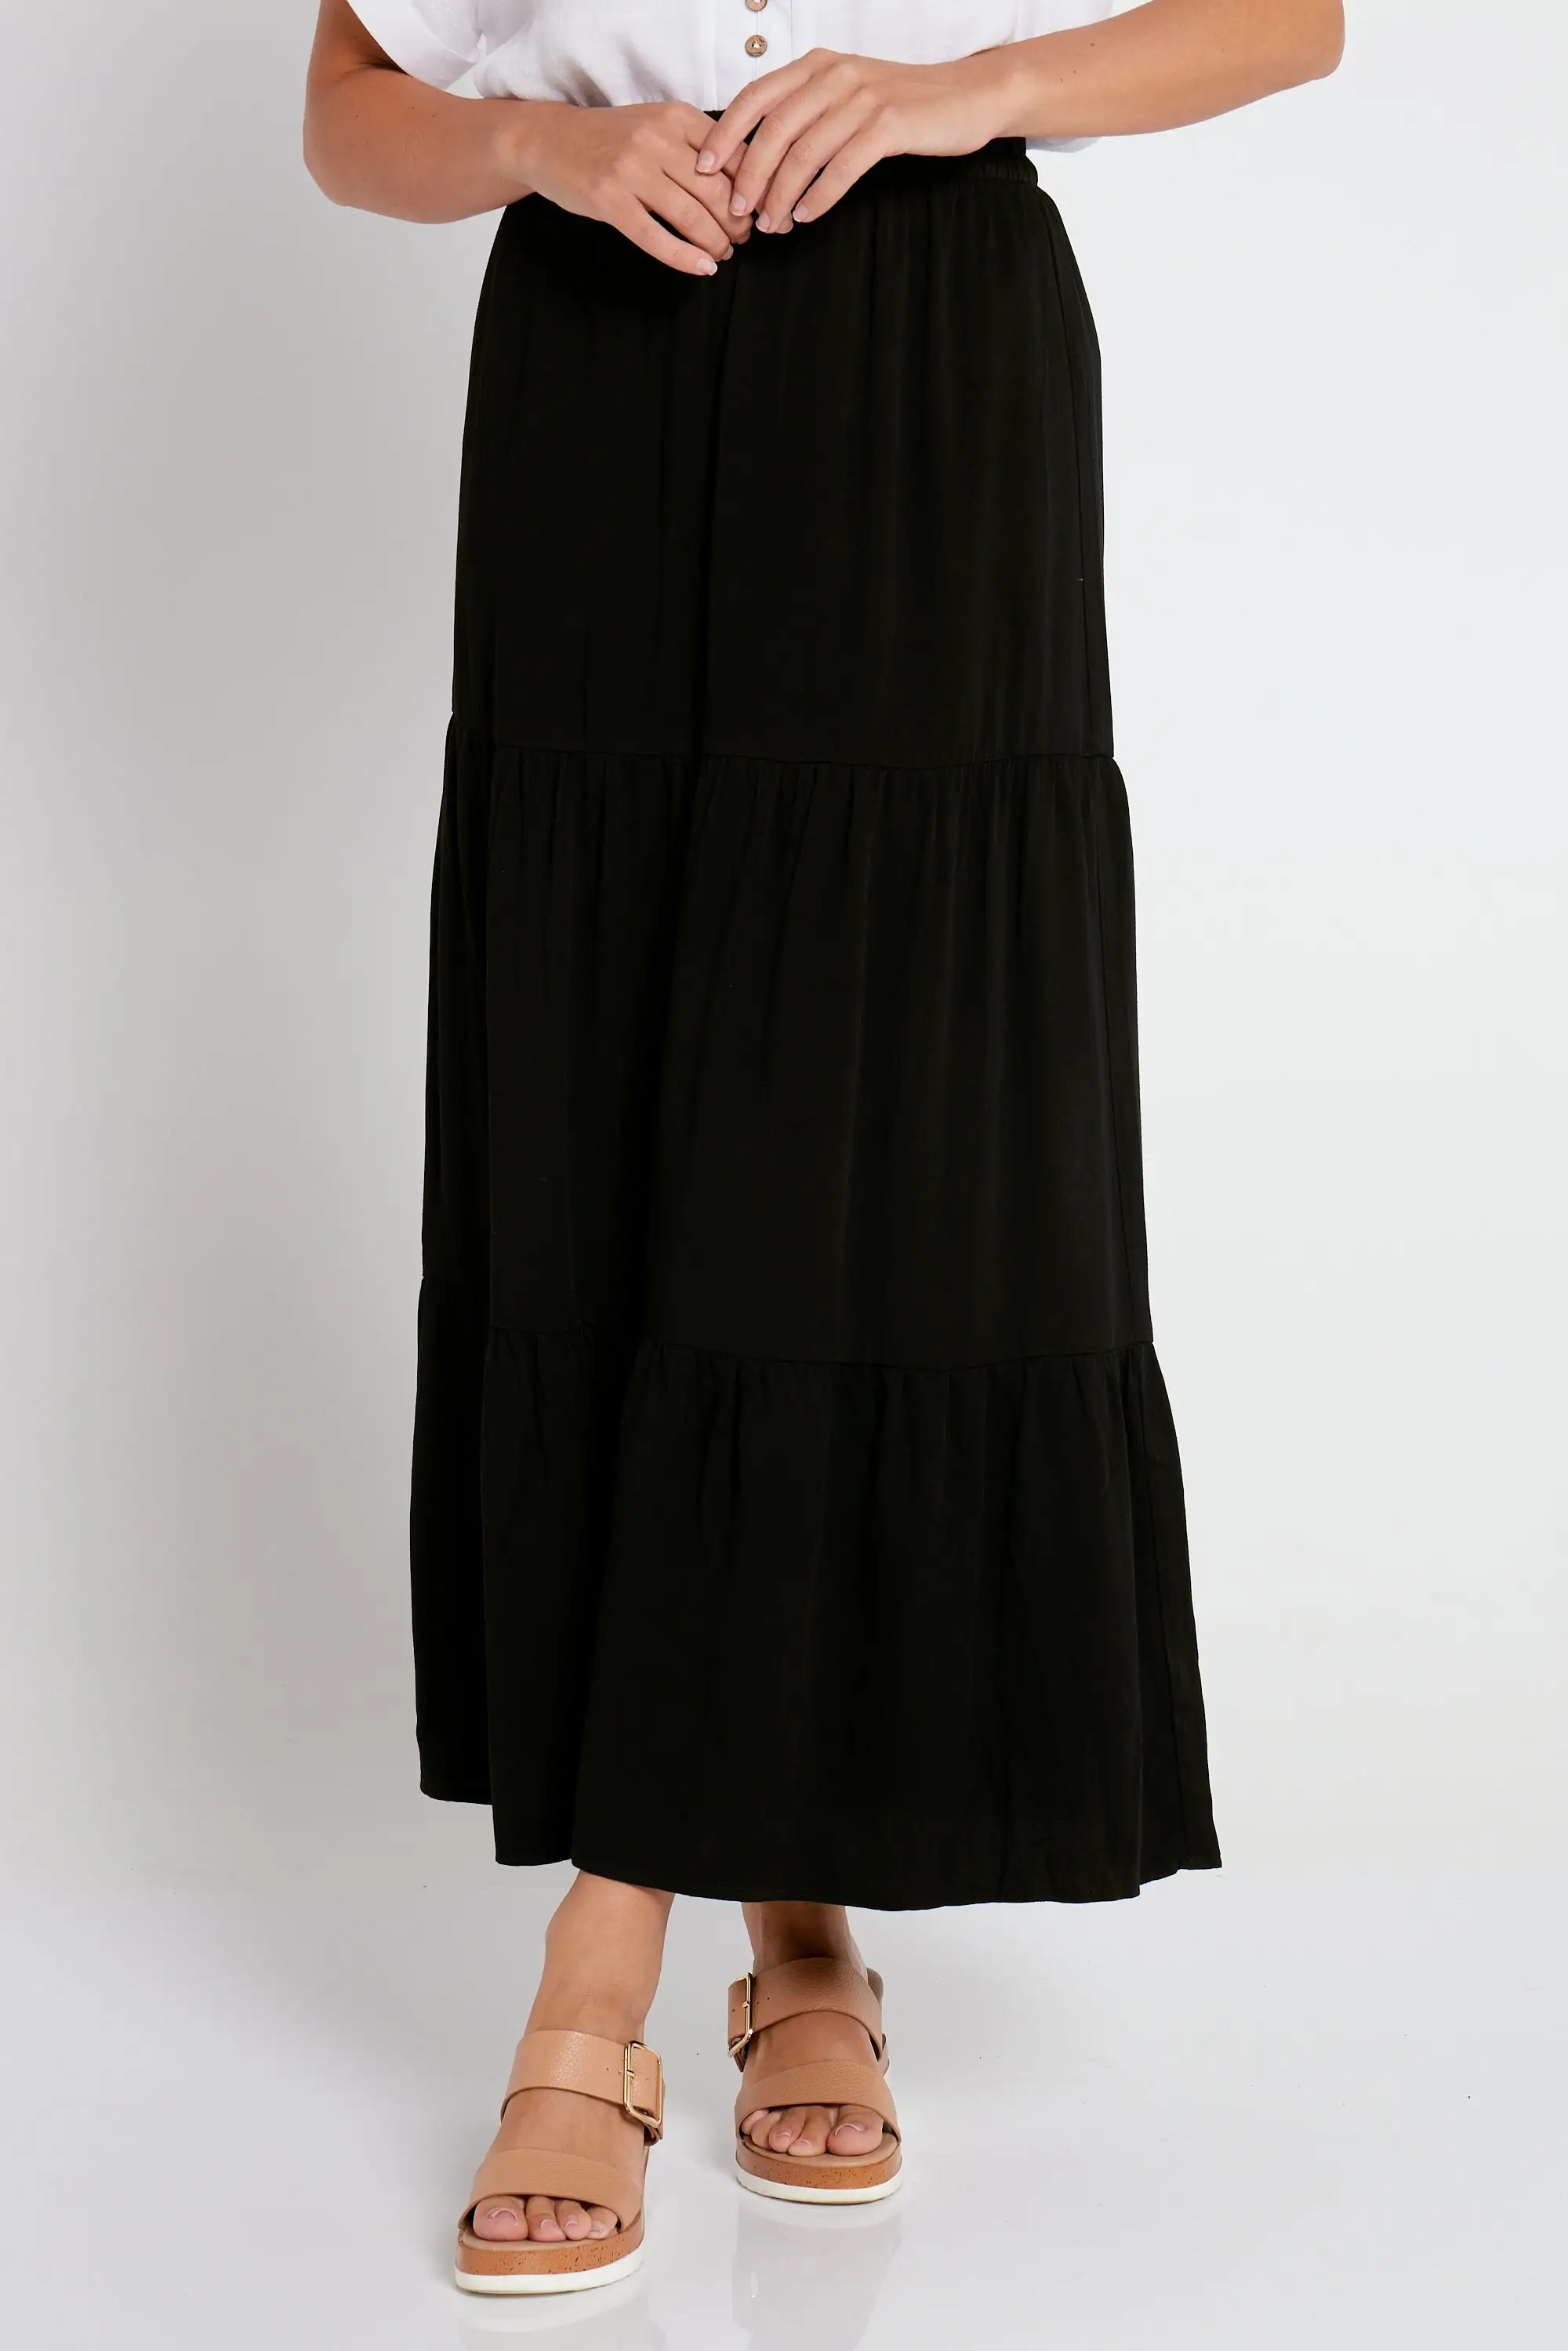 Evan Core Tier Maxi Skirt - Black